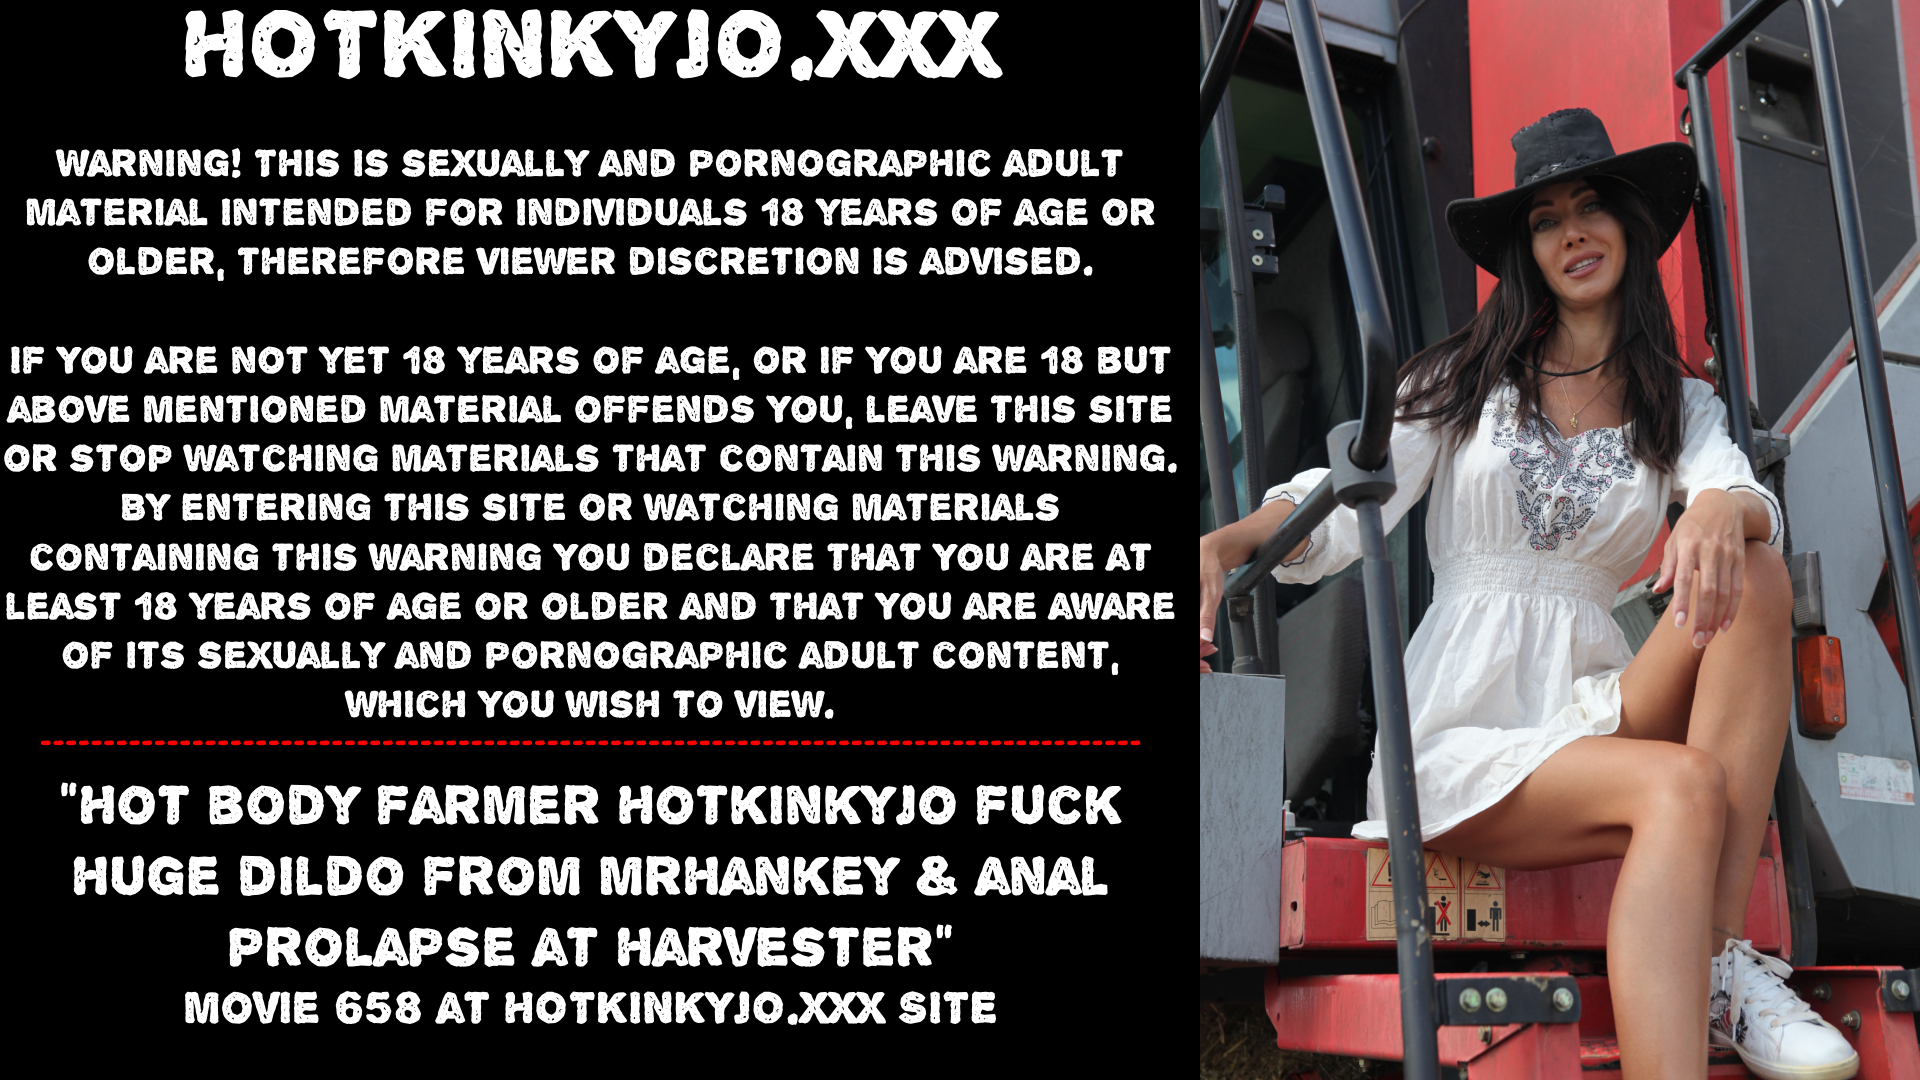 Hot body farmer Hotkinkyjo fuck huge dildo & prolapse